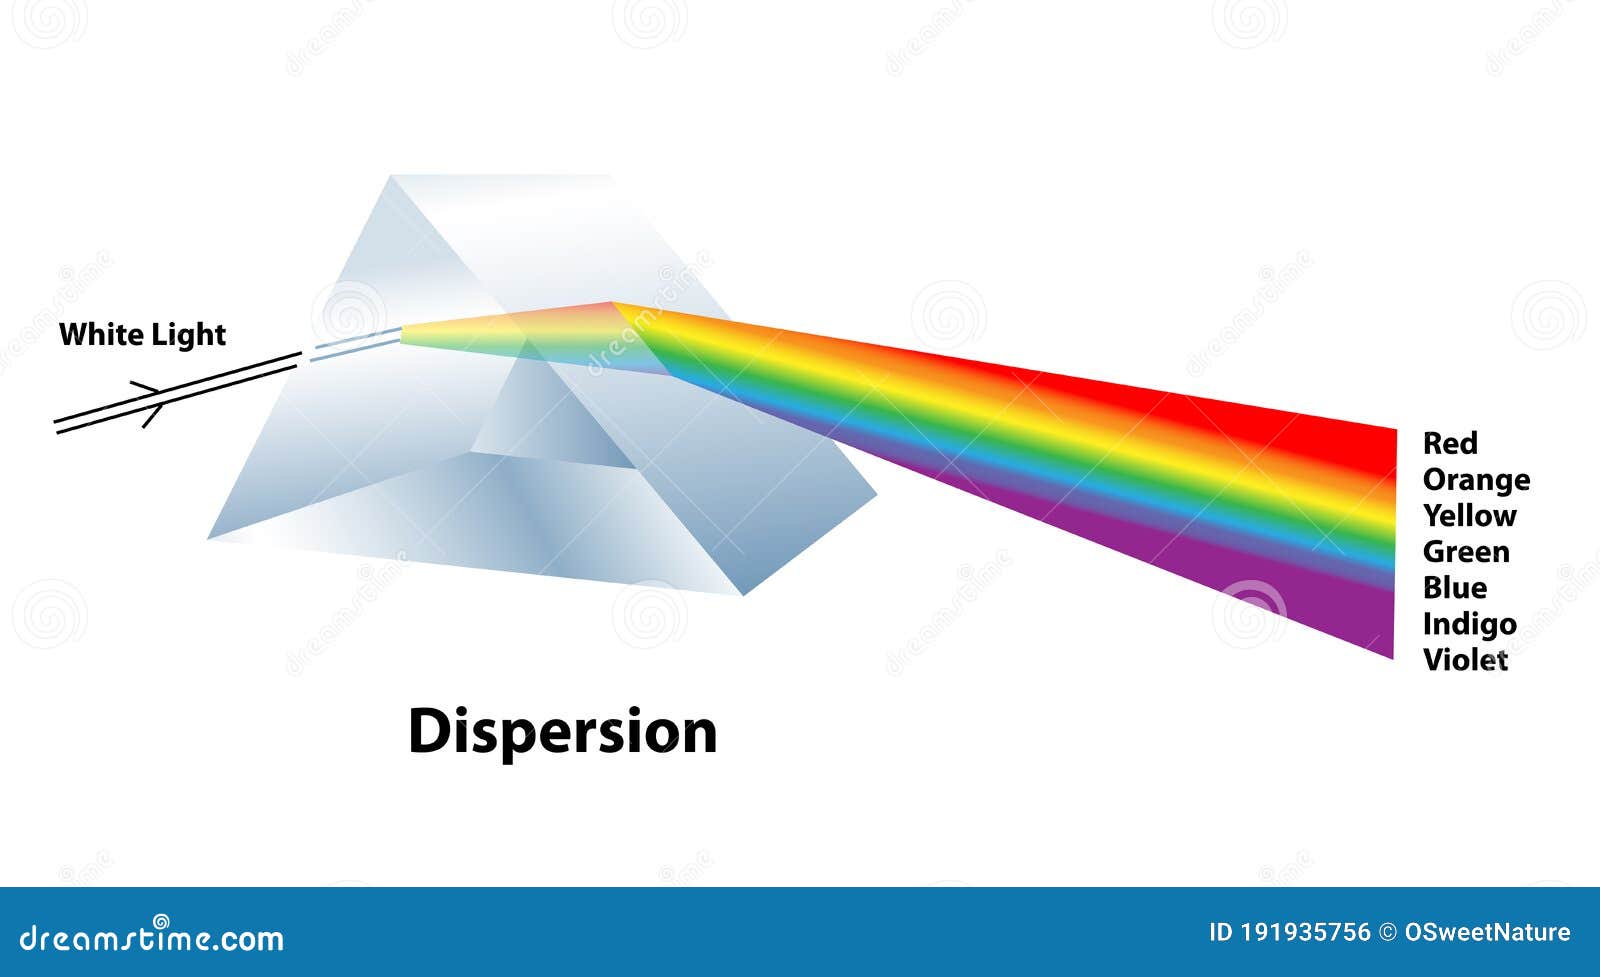 light dispersion through a glass prism